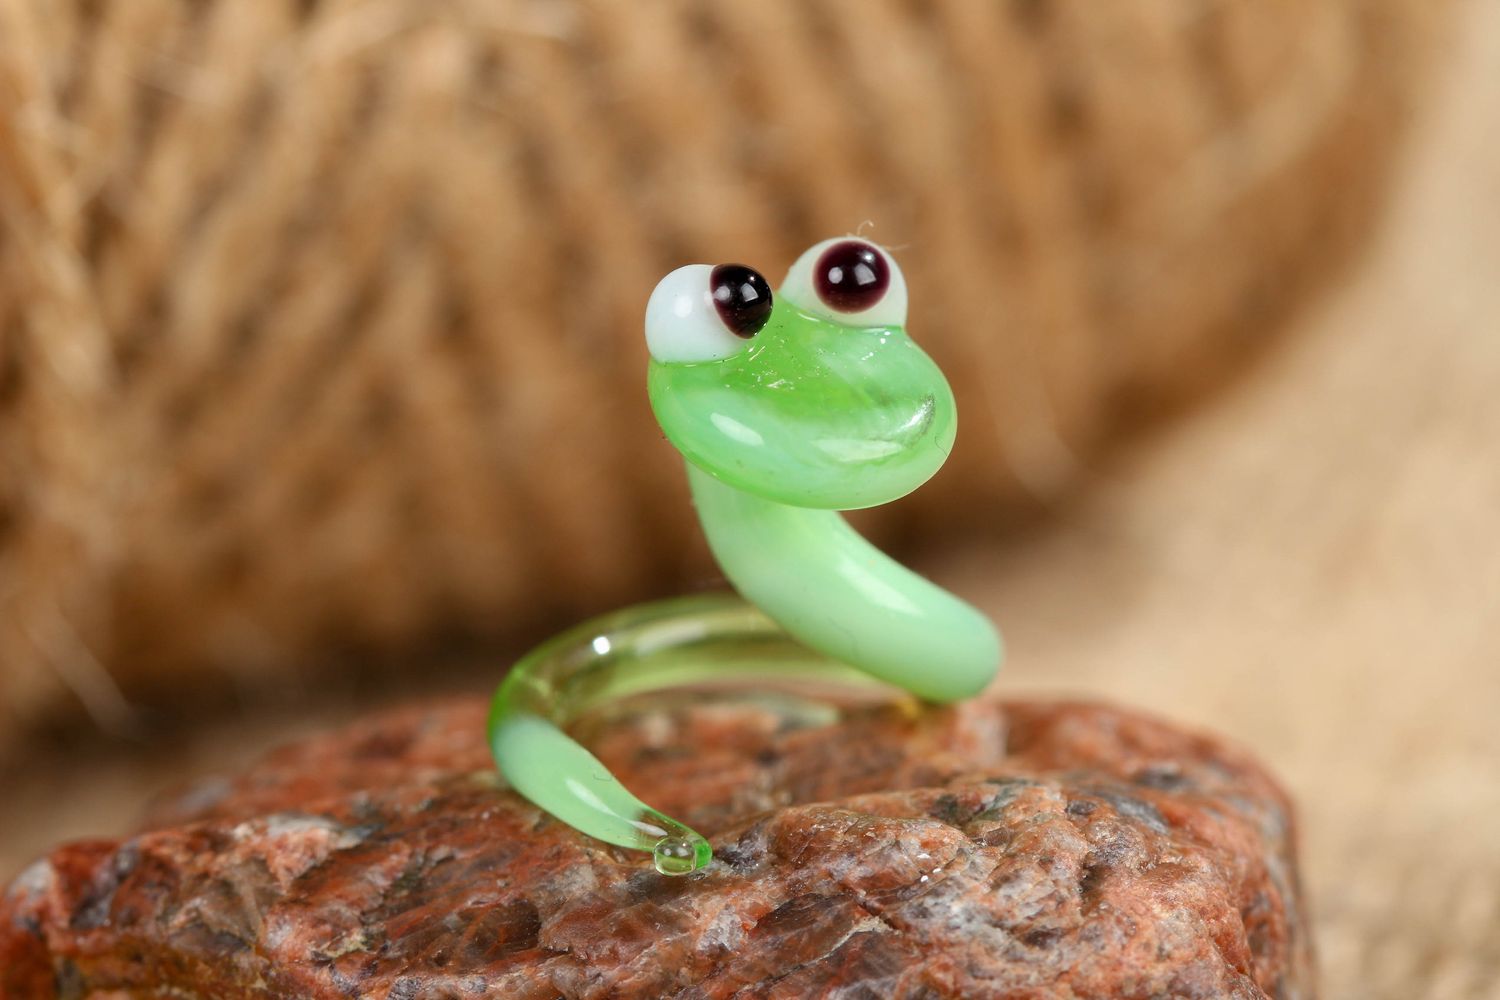 Miniature glass statuette of snake photo 4